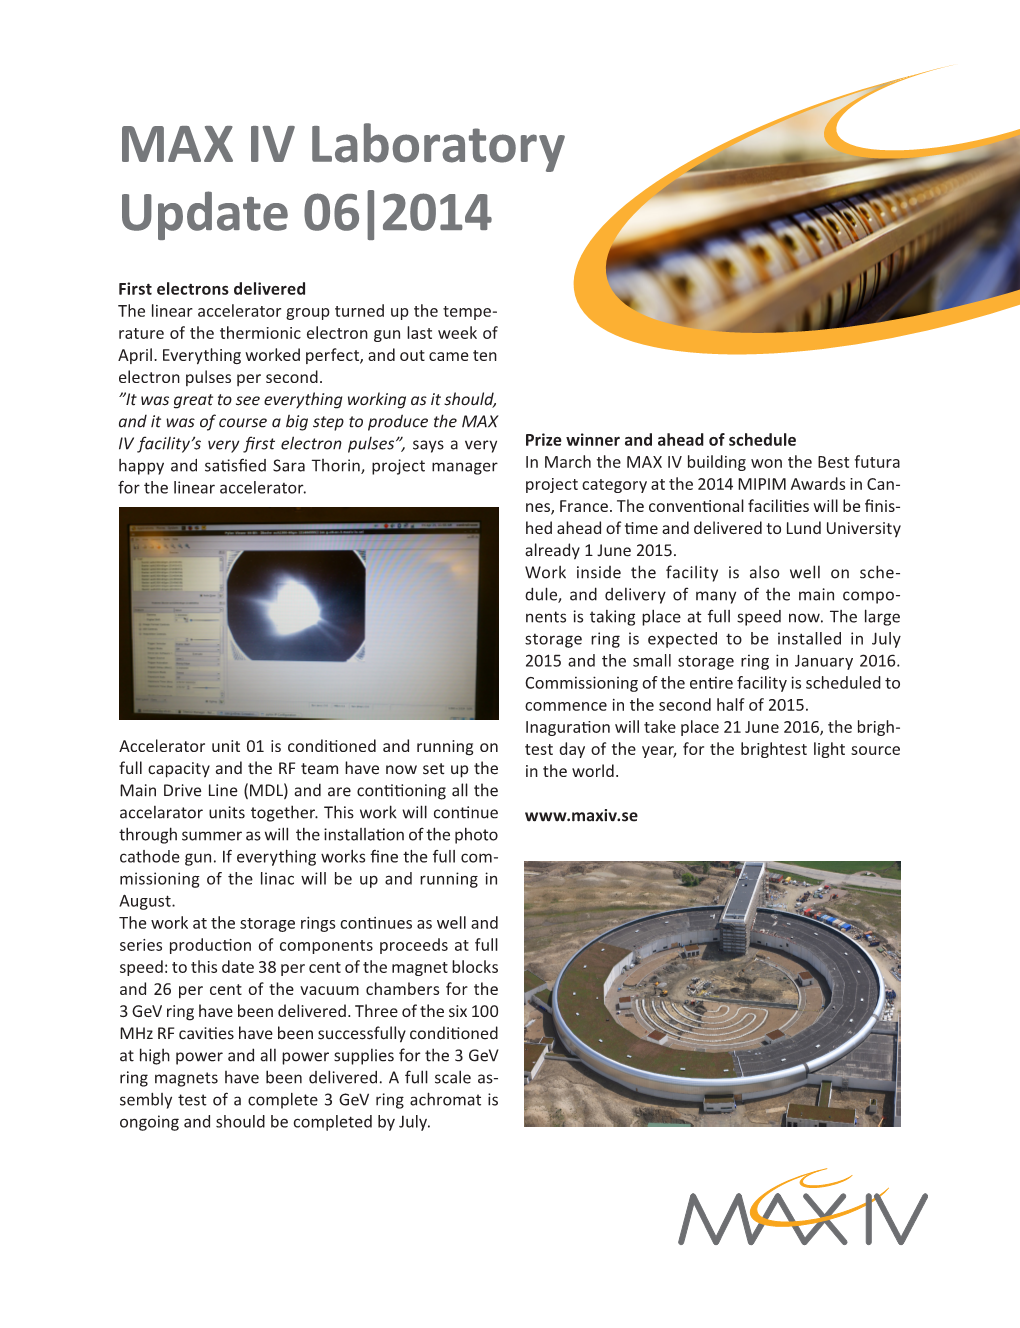 MAX IV Laboratory Update 06|2014